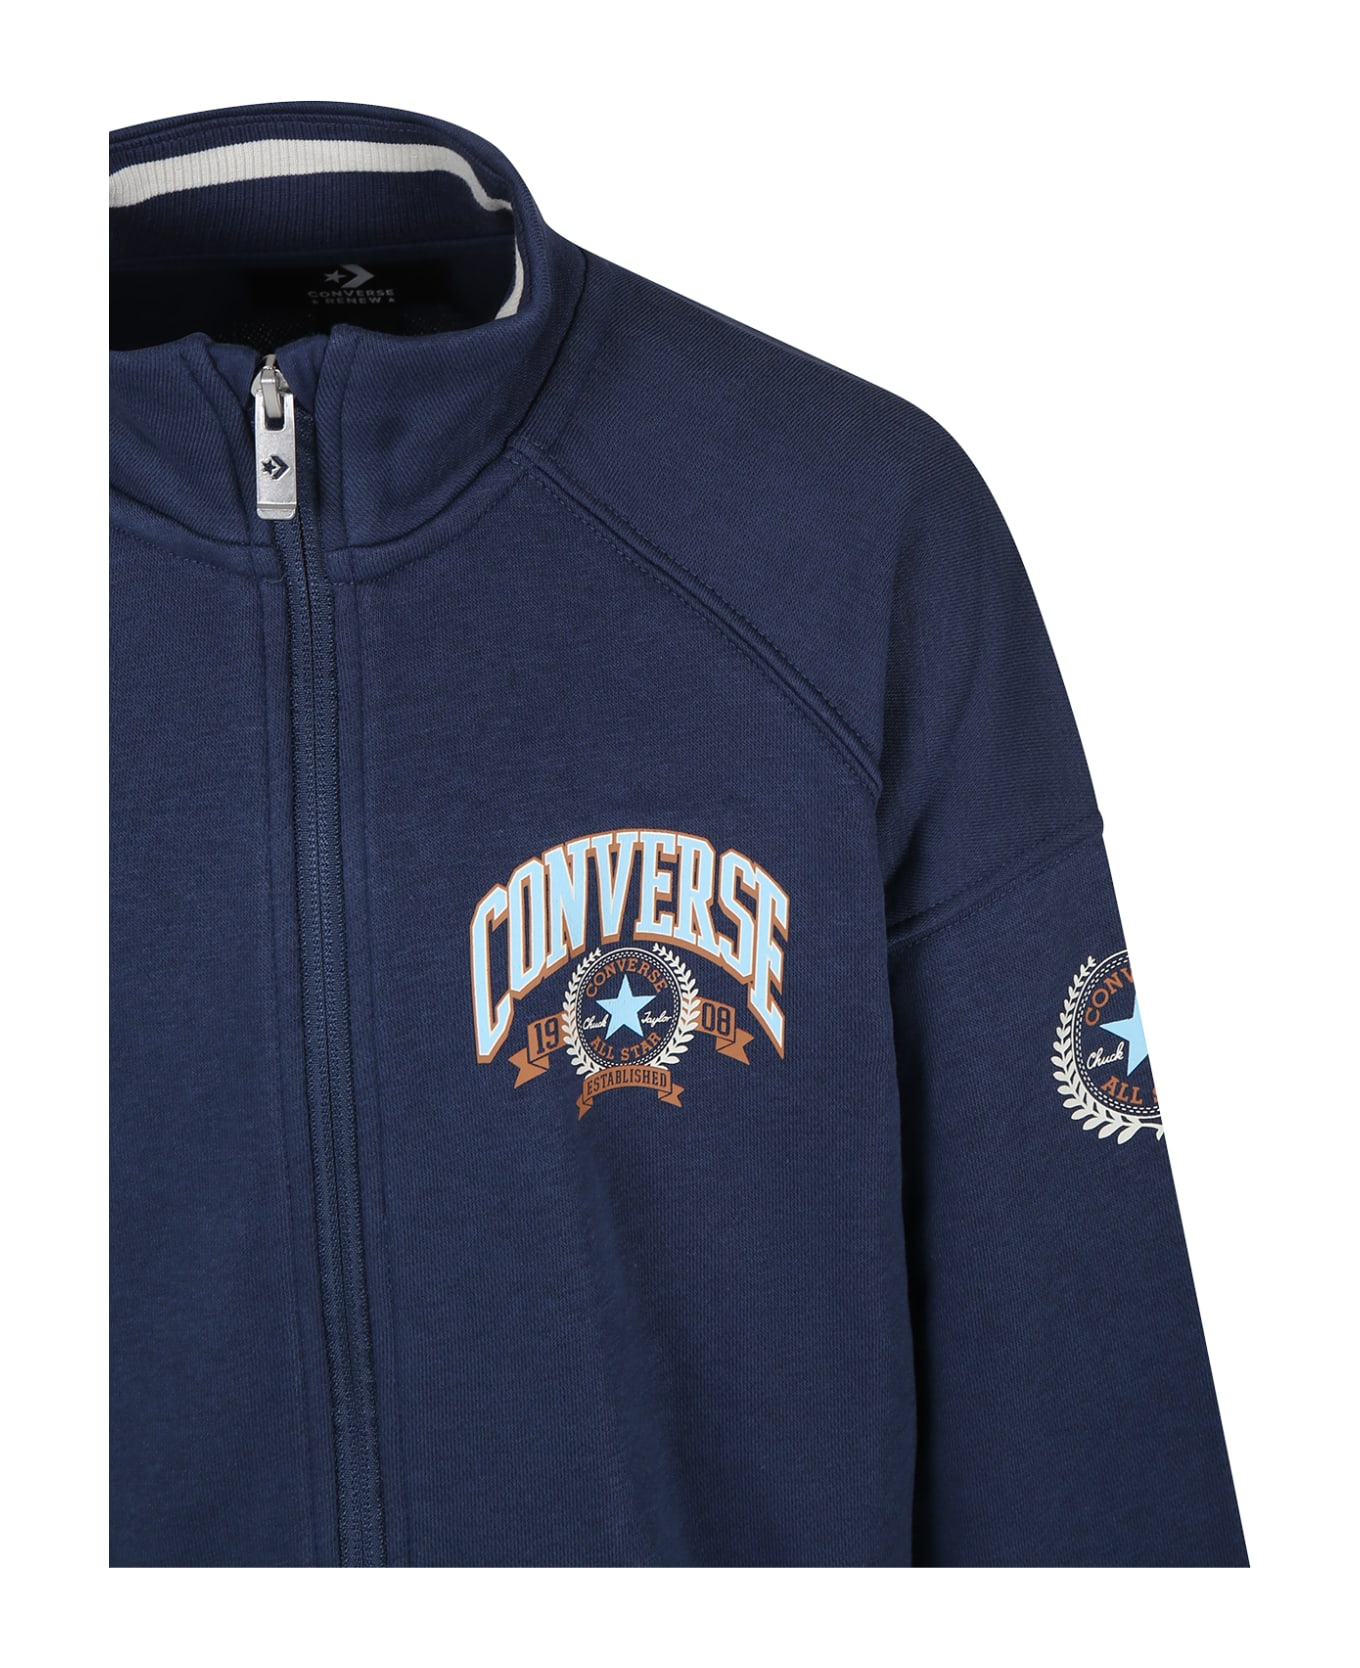 Converse Blue Sweatshirt For Boy With Logo Print - Blue